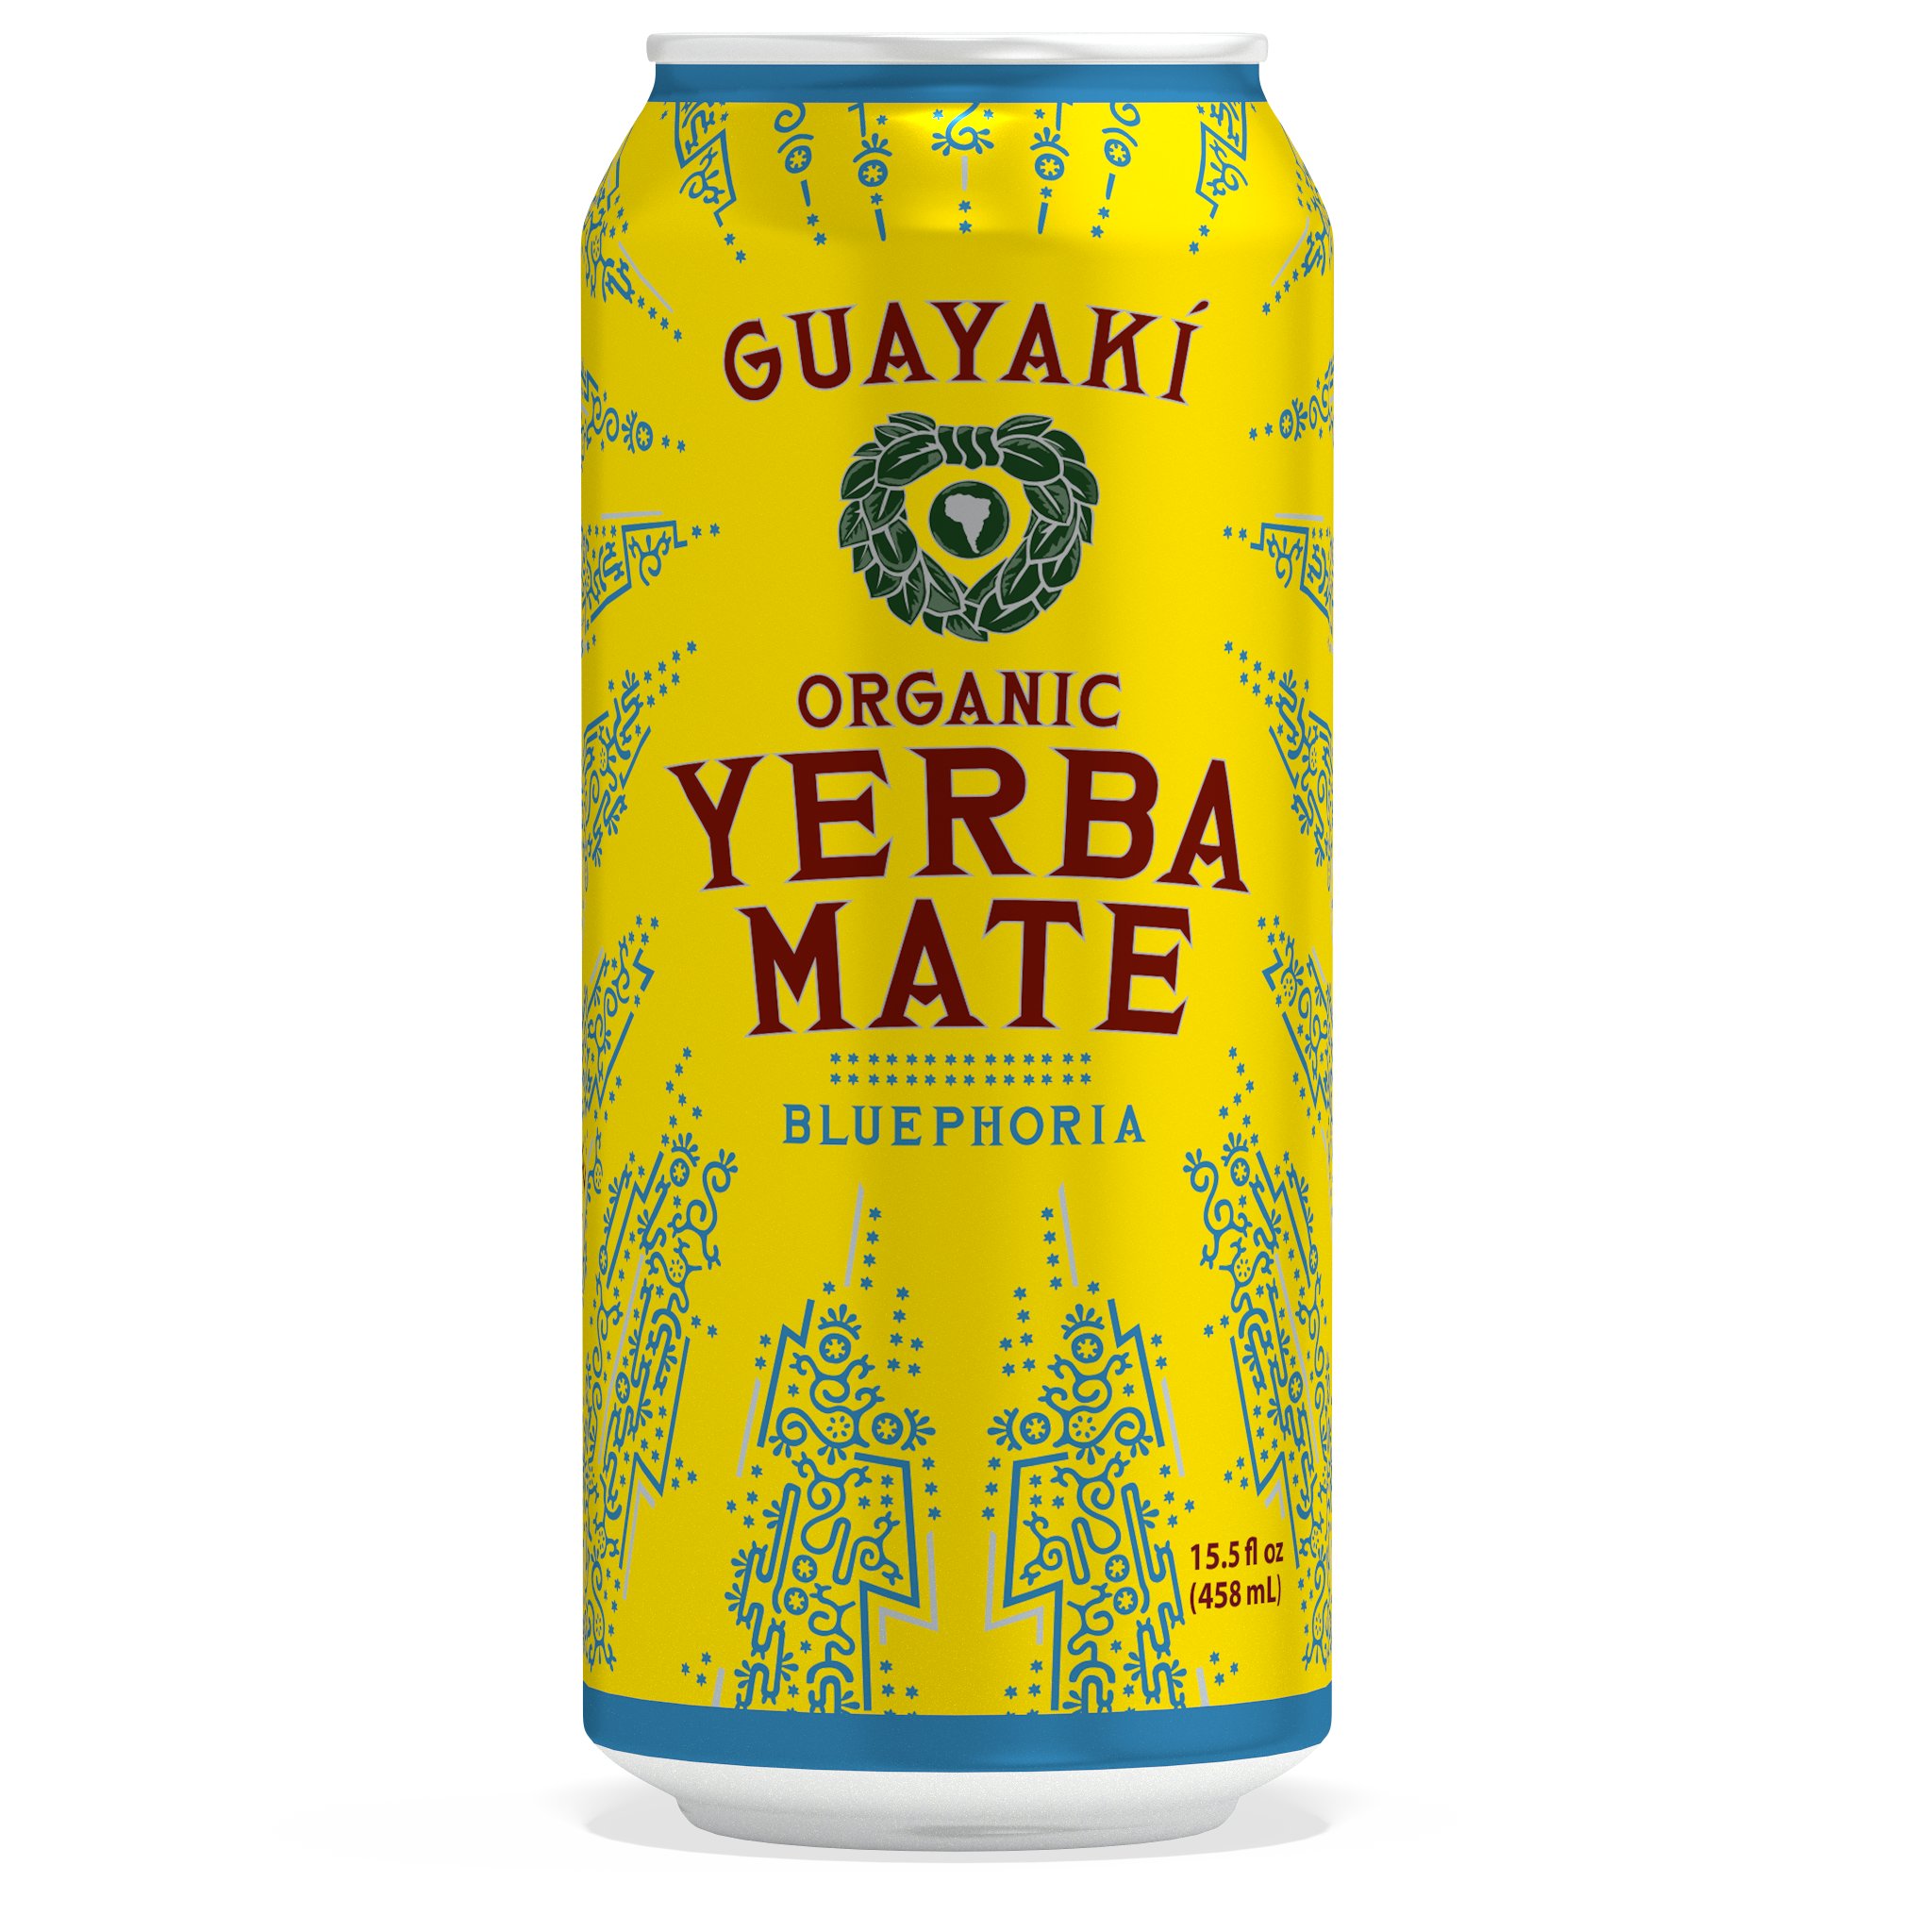 Guayaki Yerba Mate Bluephoria High Energy Drink - Shop Tea at H-E-B